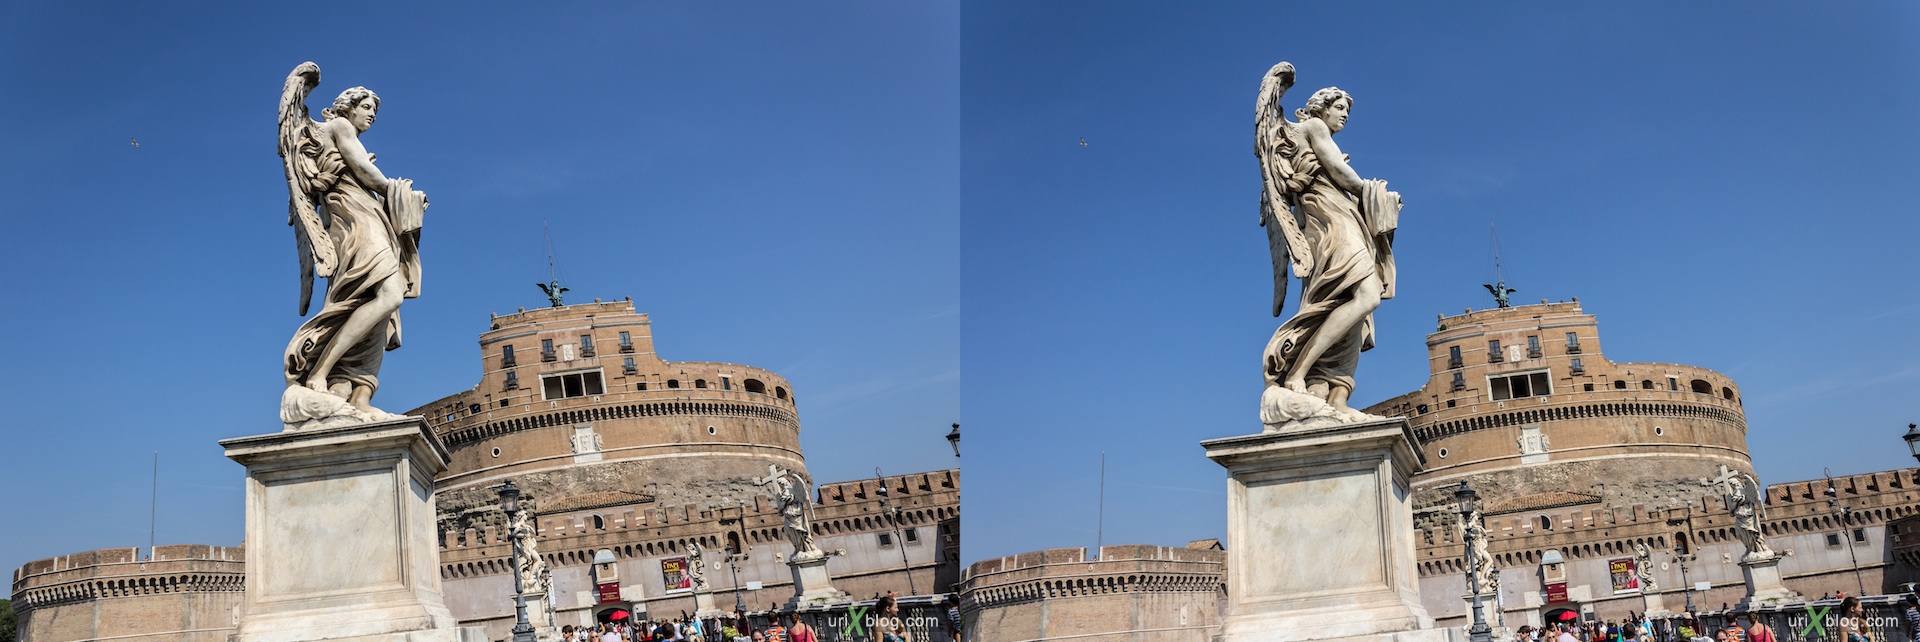 2012, Castel Sant Angelo, Mausoleum of Hadrian, bridge, 3D, stereo pair, cross-eyed, crossview, cross view stereo pair